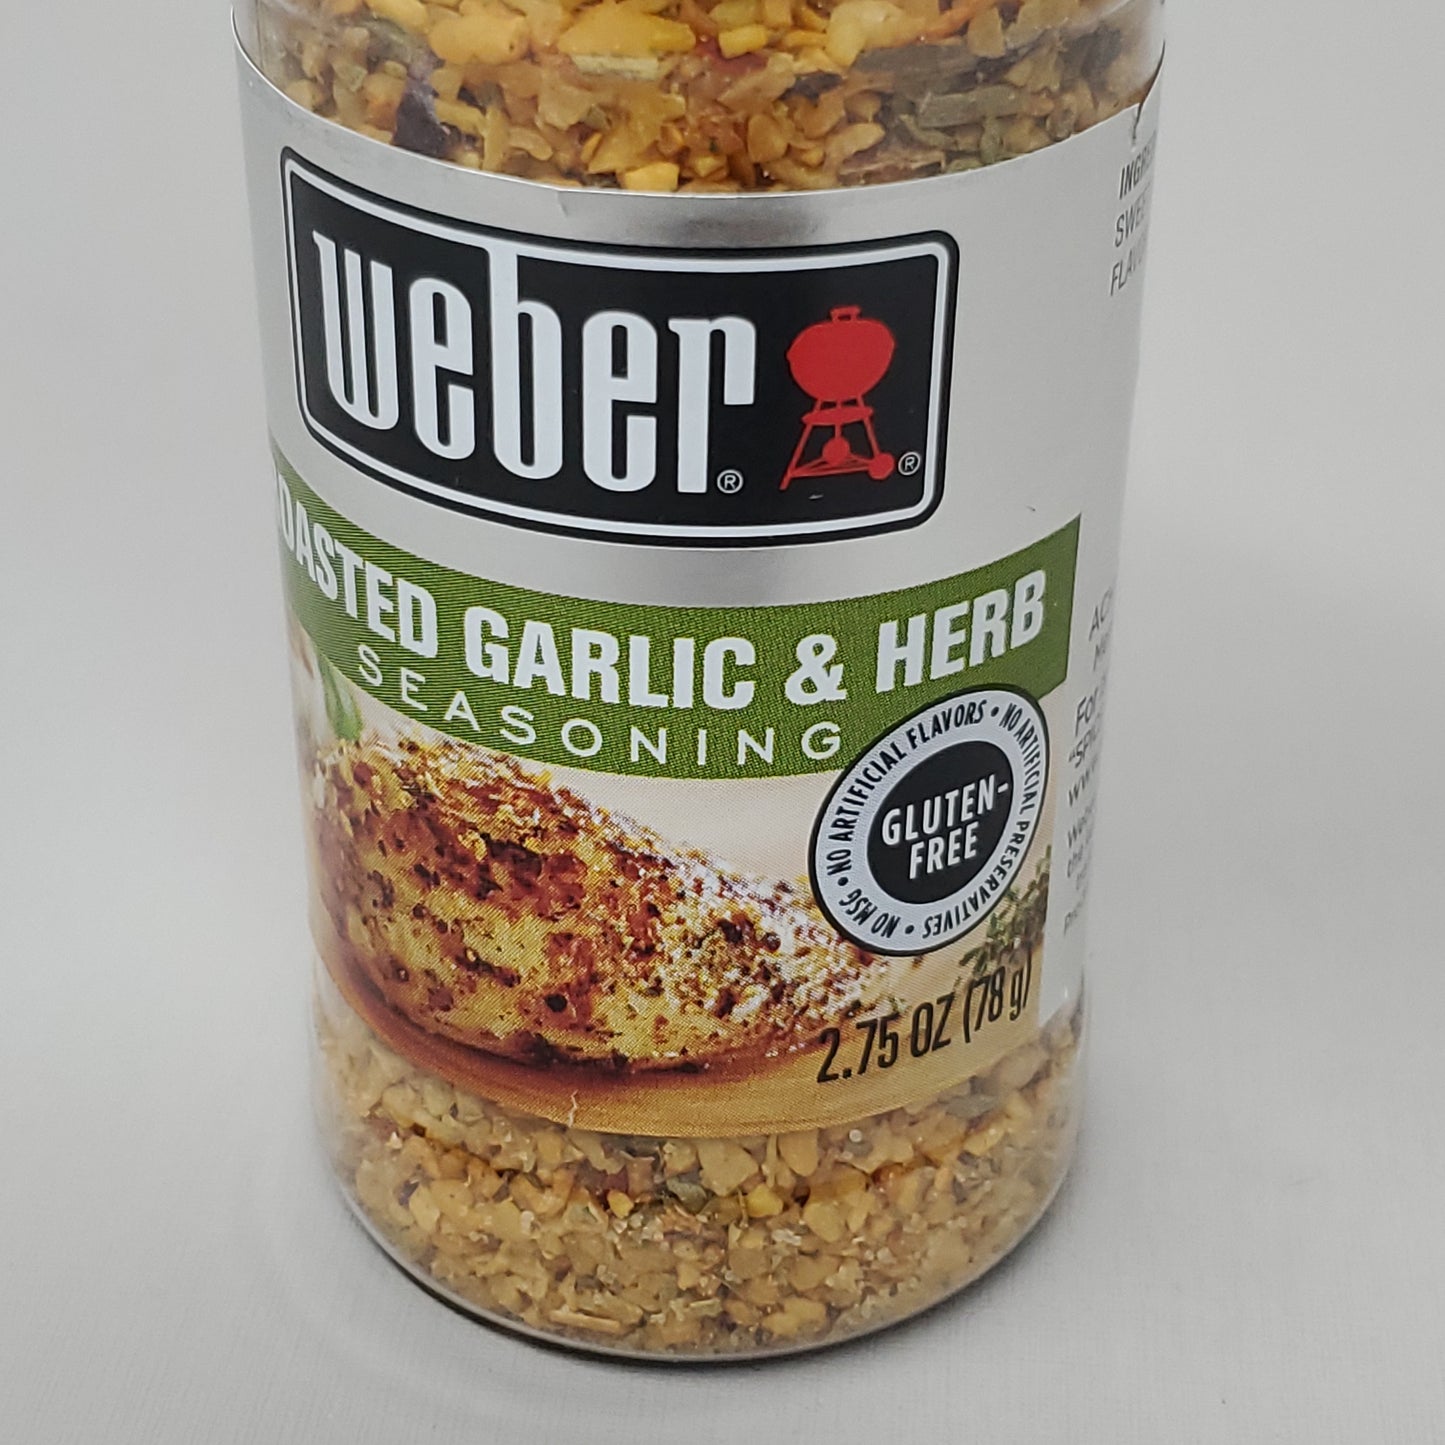 WEBER Roasted Garlic & Herbs Seasoning 2-PACK Gluten Free 2.75 oz  Exp 2/27 (New)